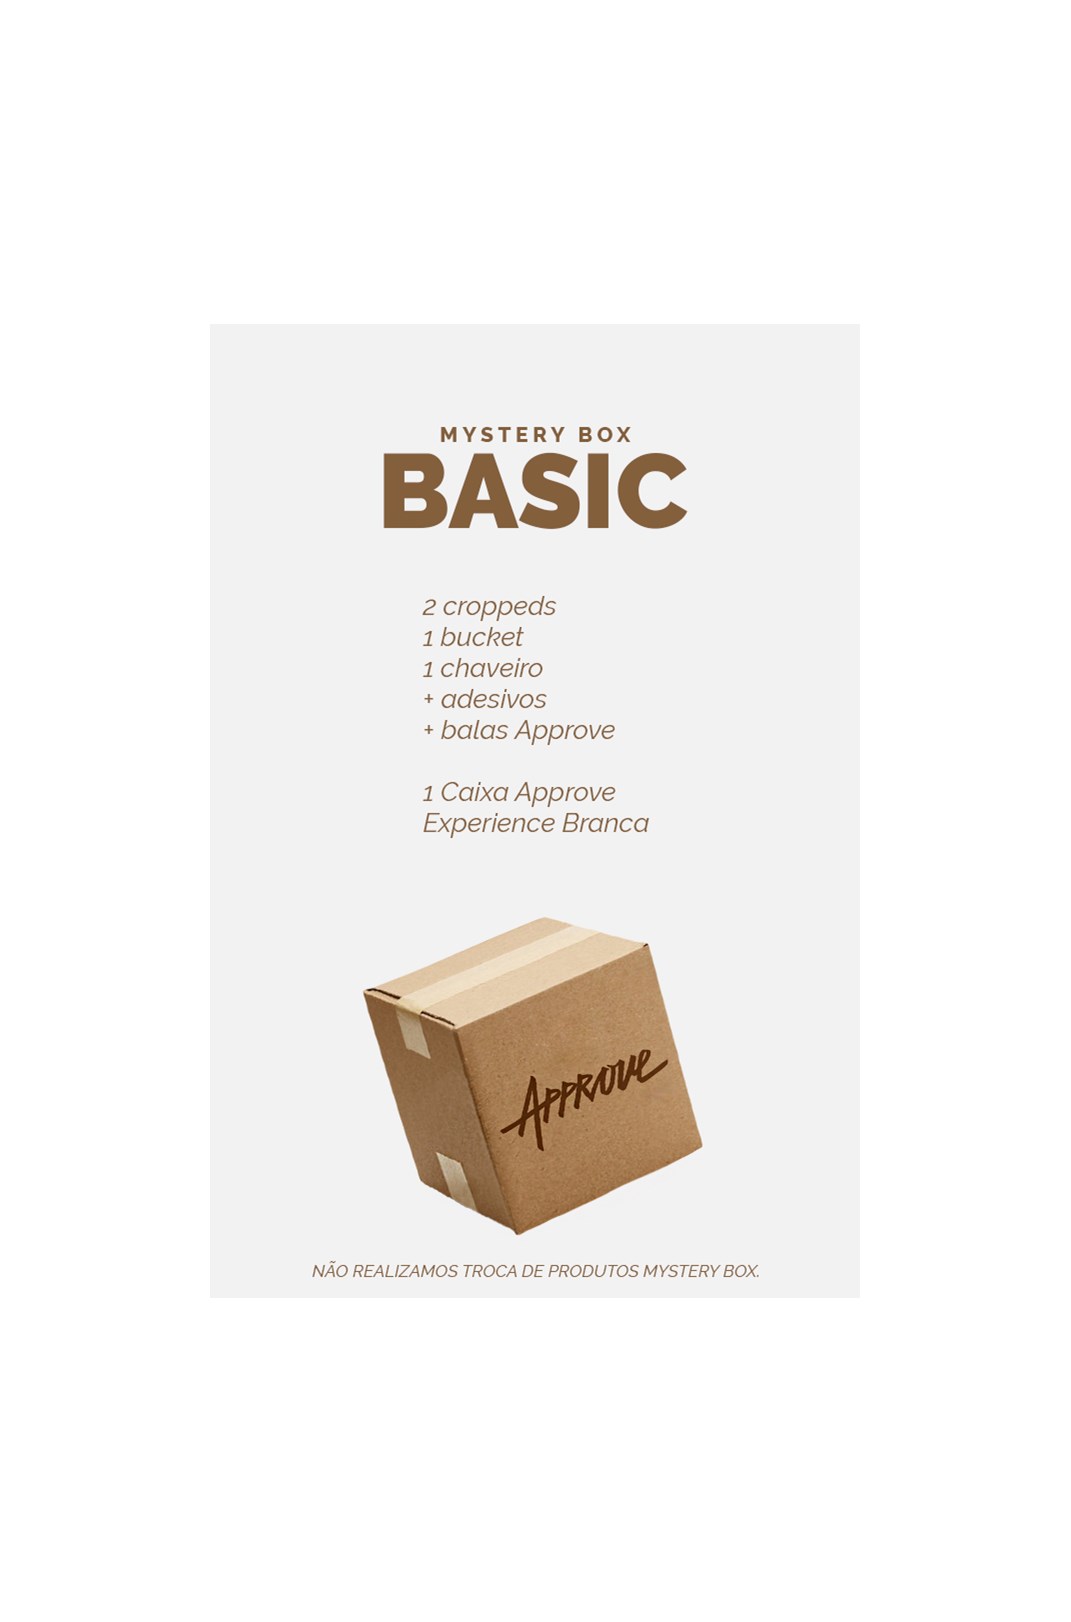 Mystery Box Approve Basic